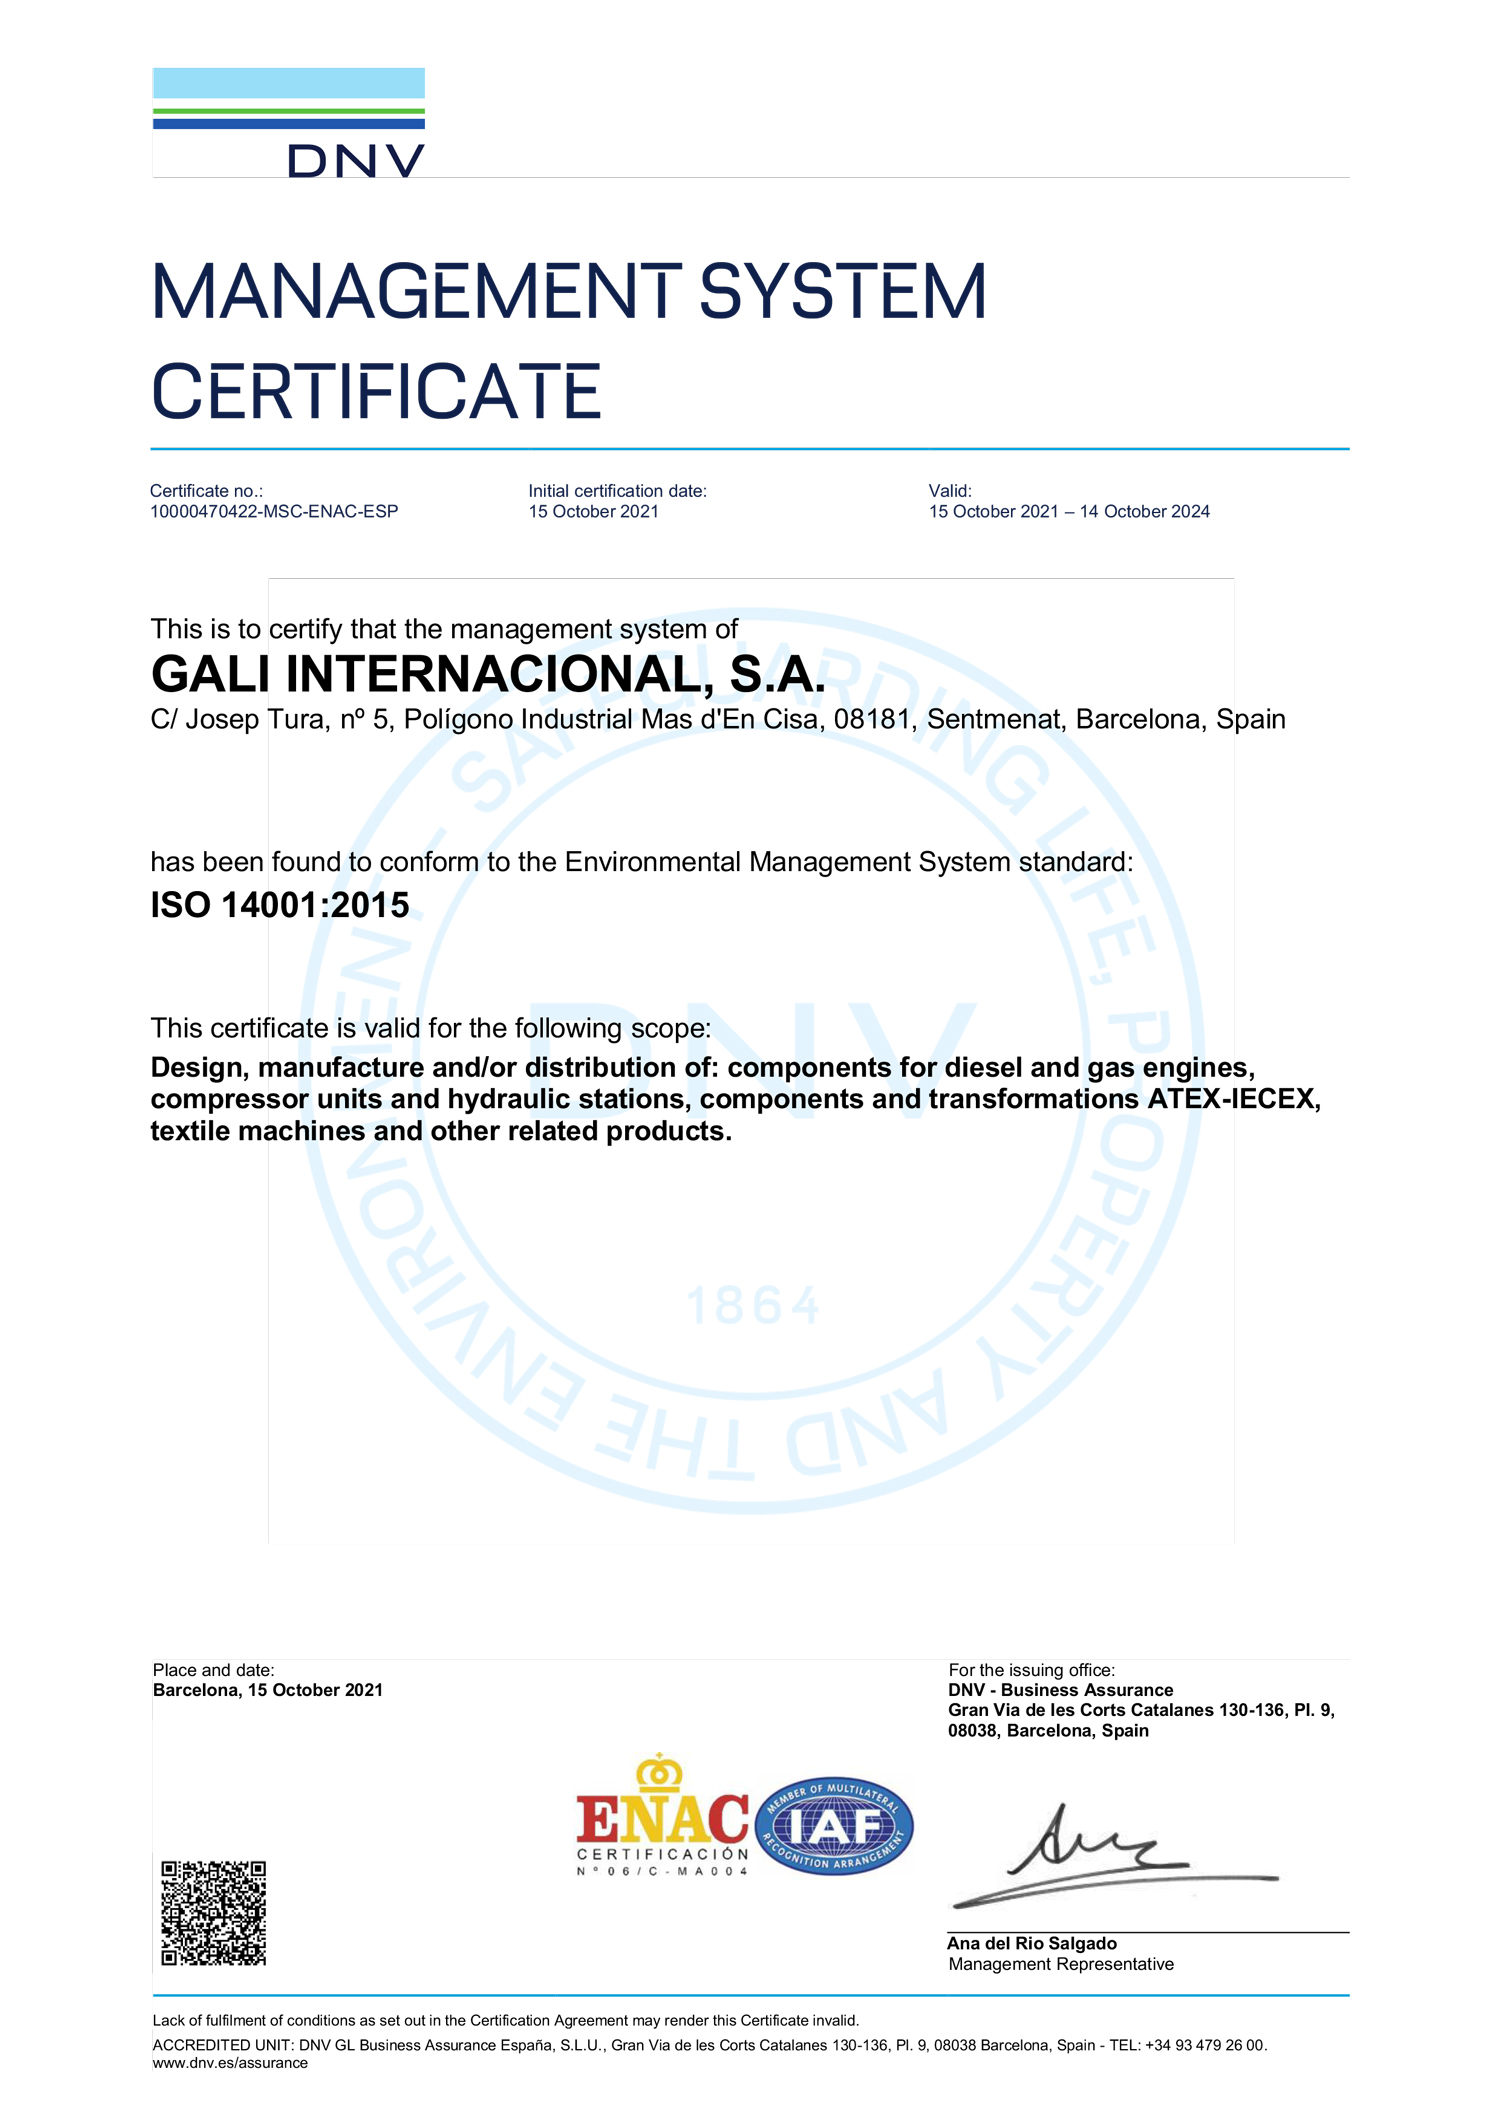 Certificate ISO-14001-2015 gali internacional EN